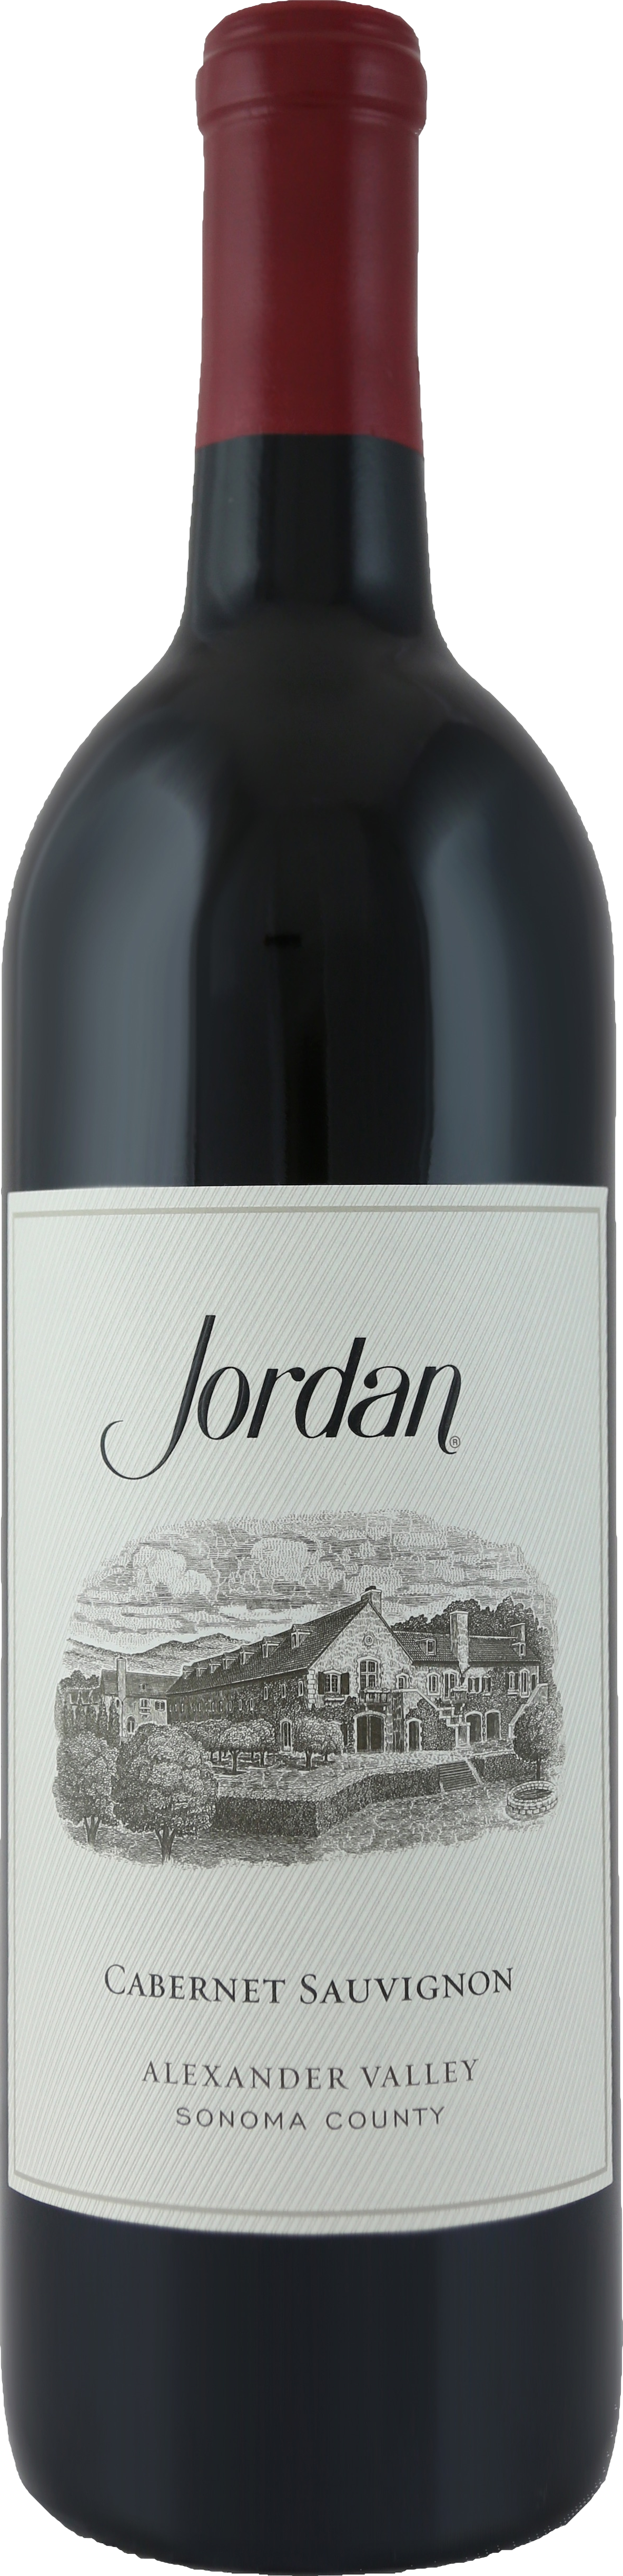 09.2017 günstig Kaufen-Jordan Winery Cabernet Sauvignon 2017. Jordan Winery Cabernet Sauvignon 2017 . 